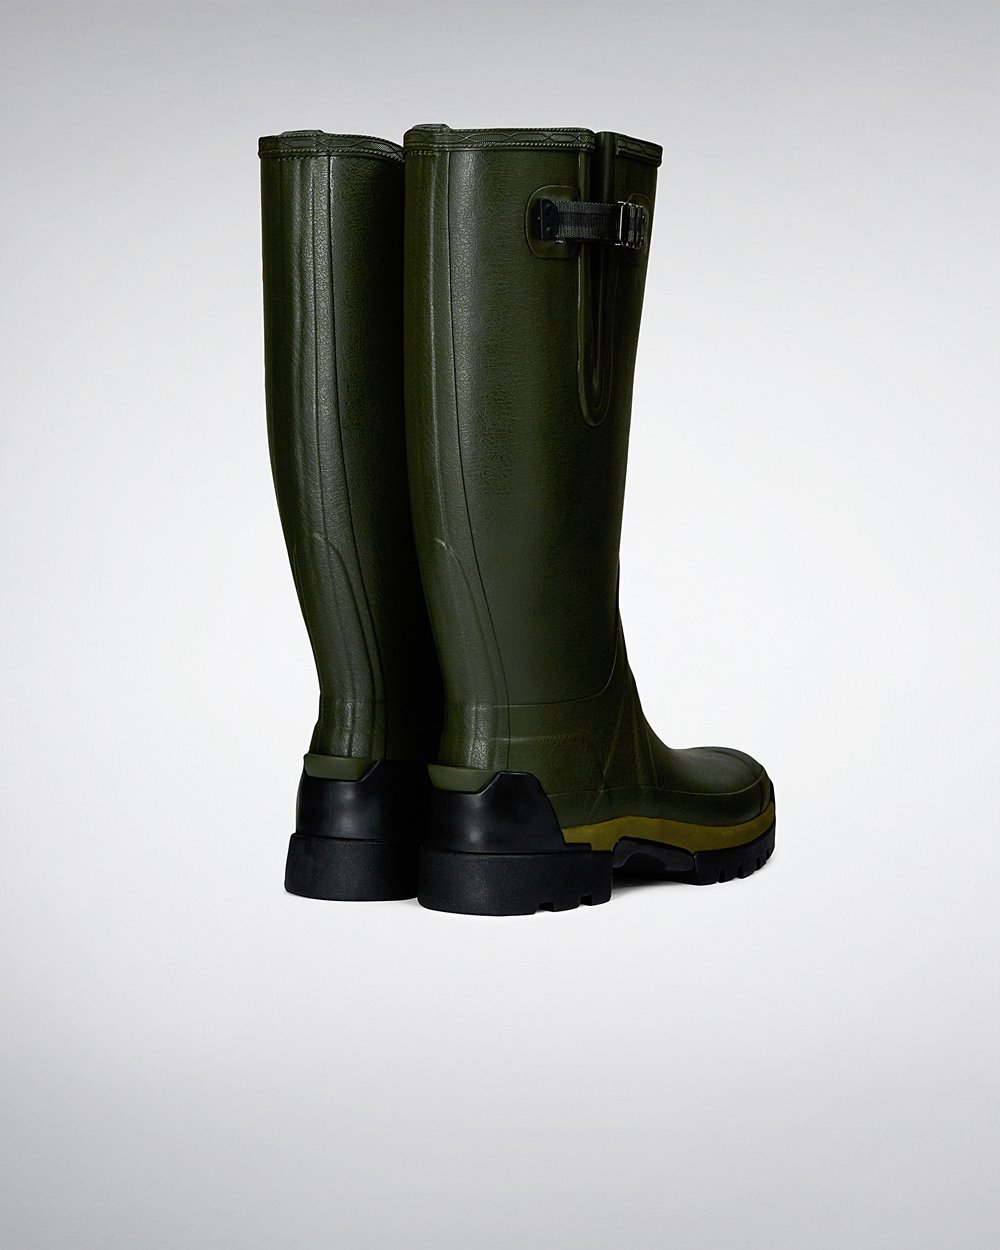 Mens Tall Rain Boots - Hunter Balmoral Adjustable 3Mm Neoprene (96VZIFYTR) - Dark Olive